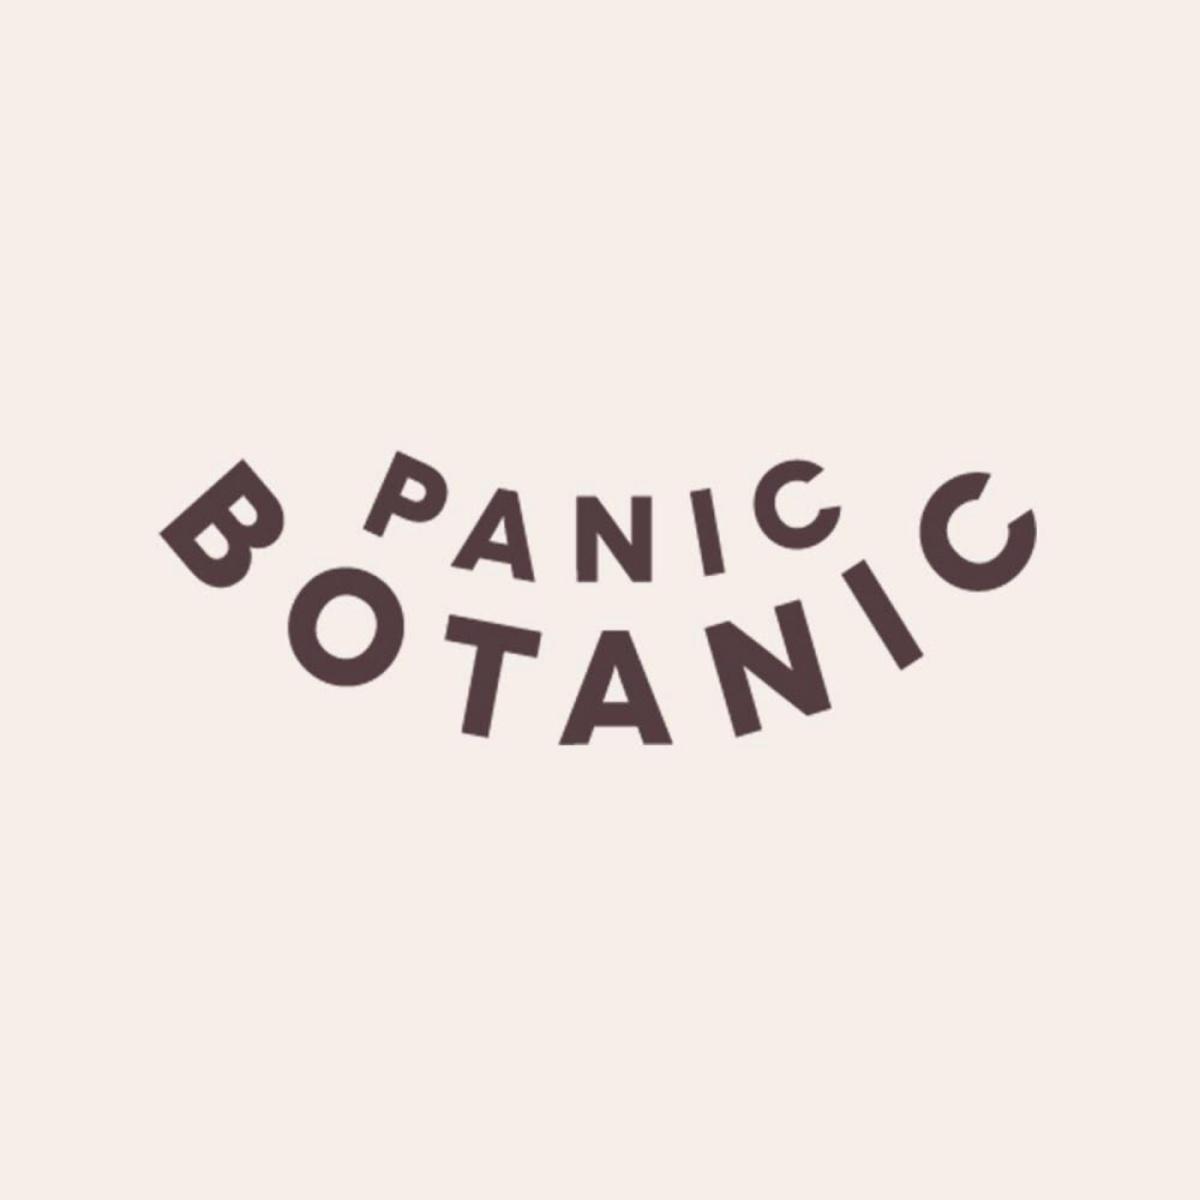 Panic Botanic